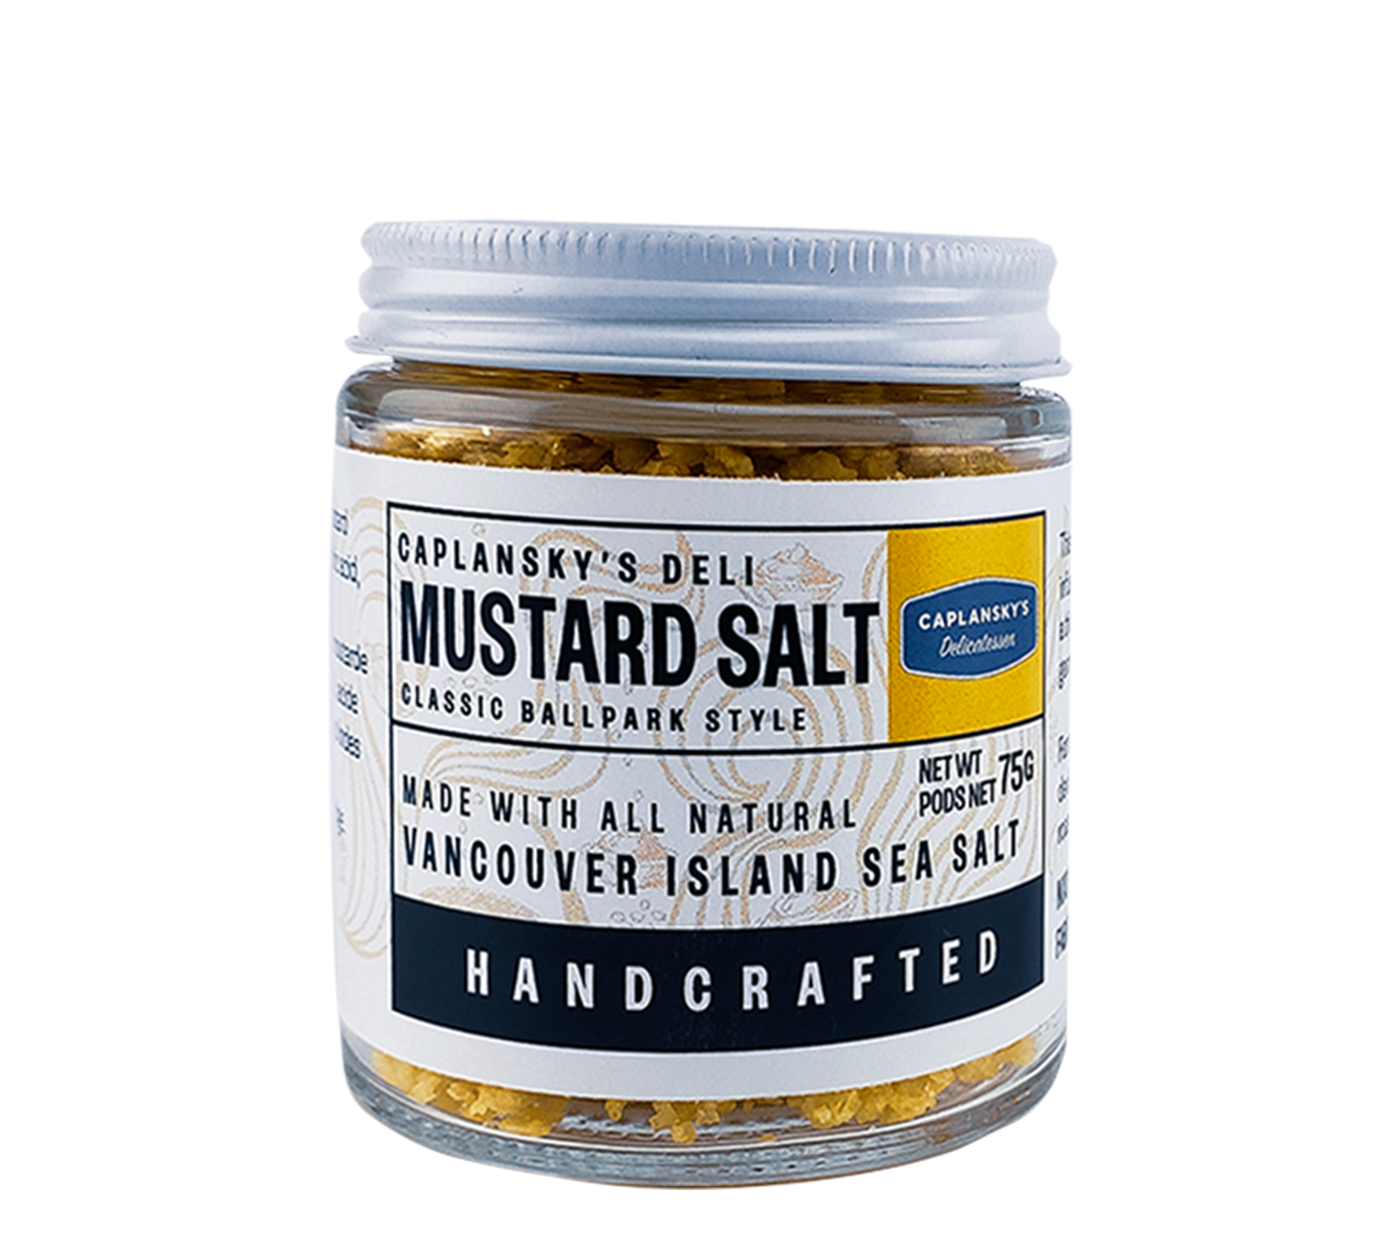 Caplansky's Deli Mustard Salt